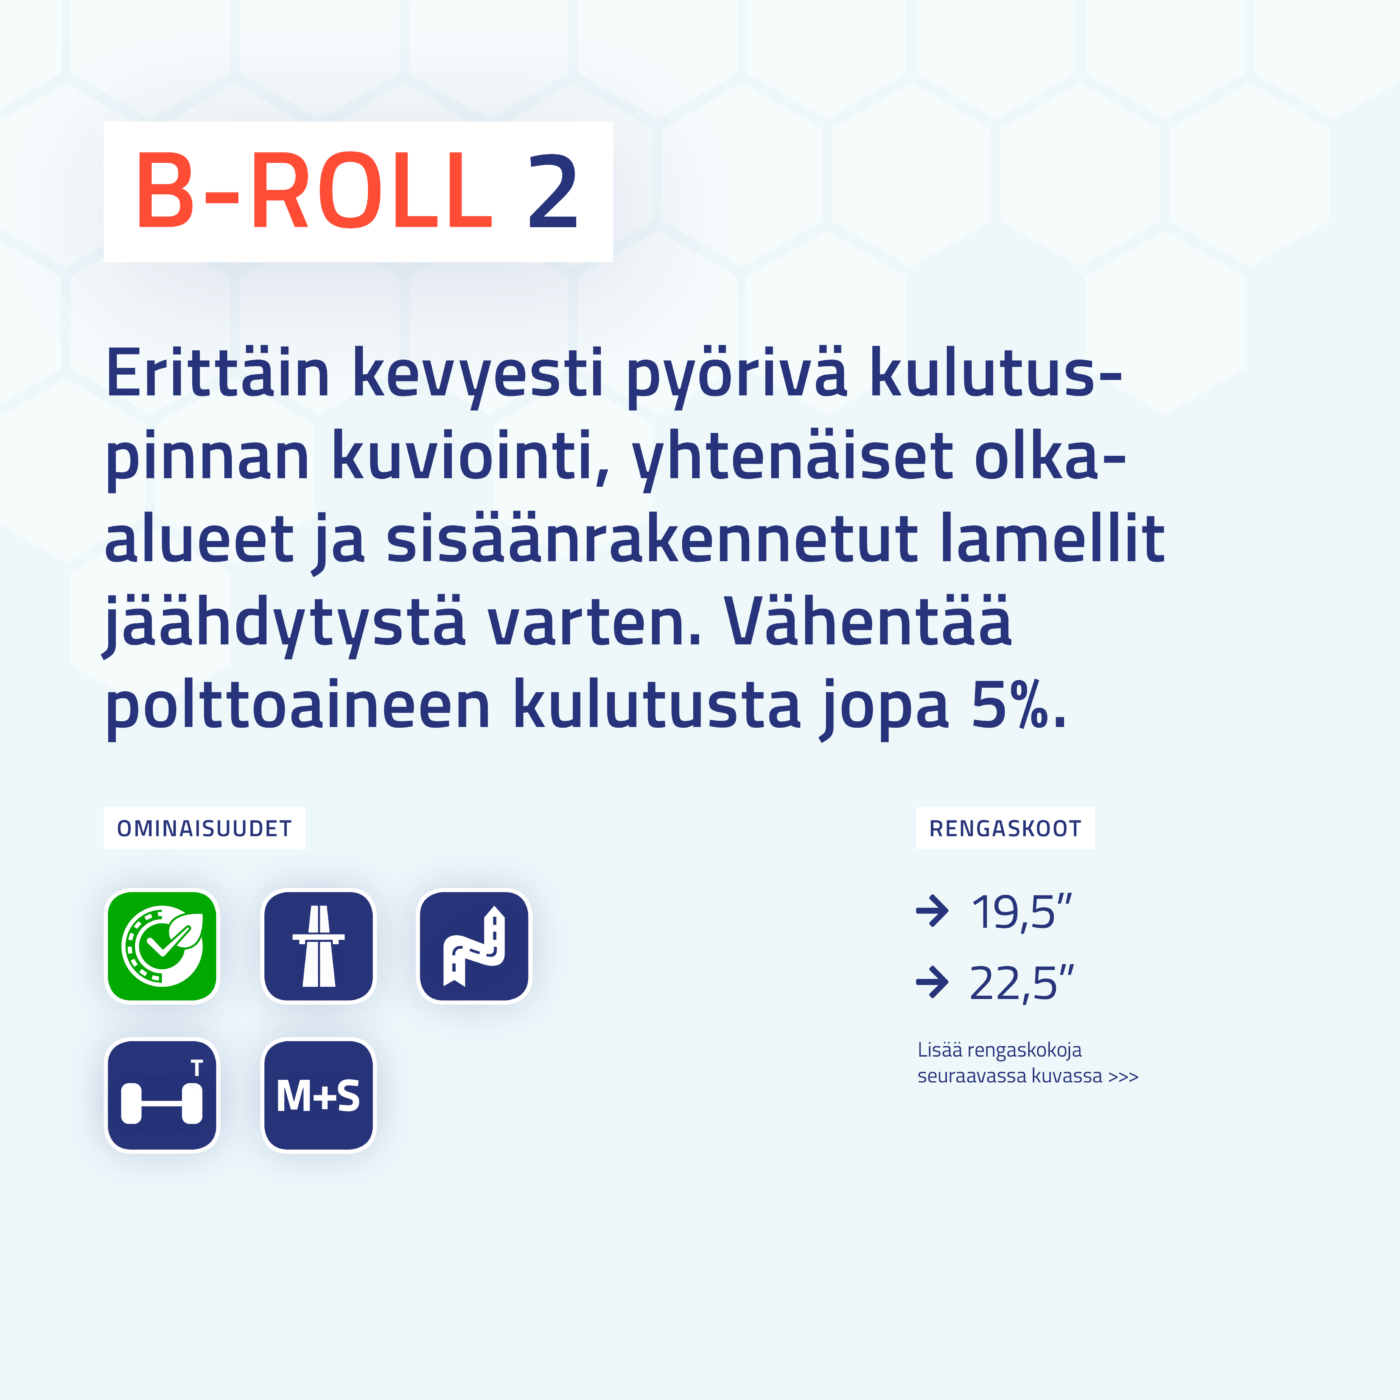 B-ROLL 2